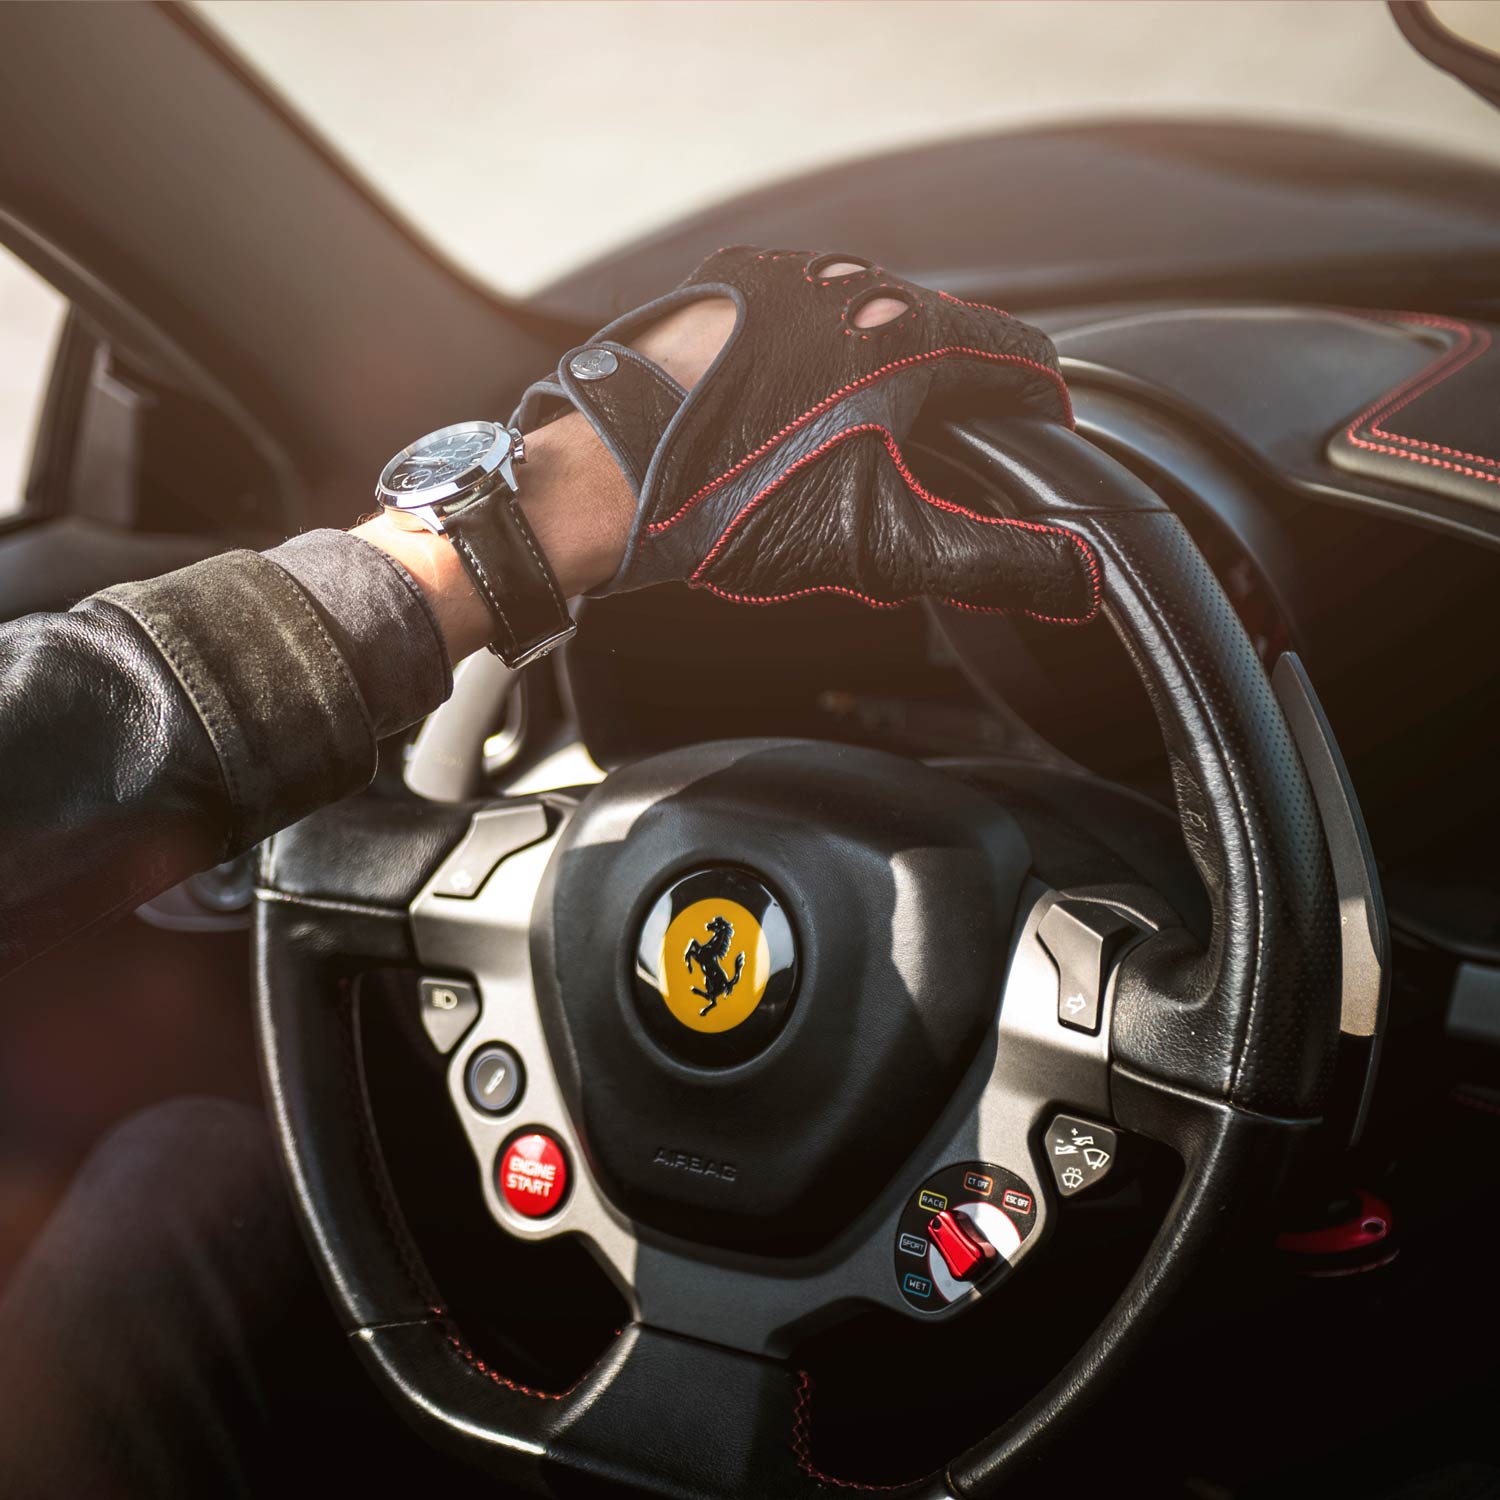 Ferrari Red driving gloves - Opinari - Driver's Essentials